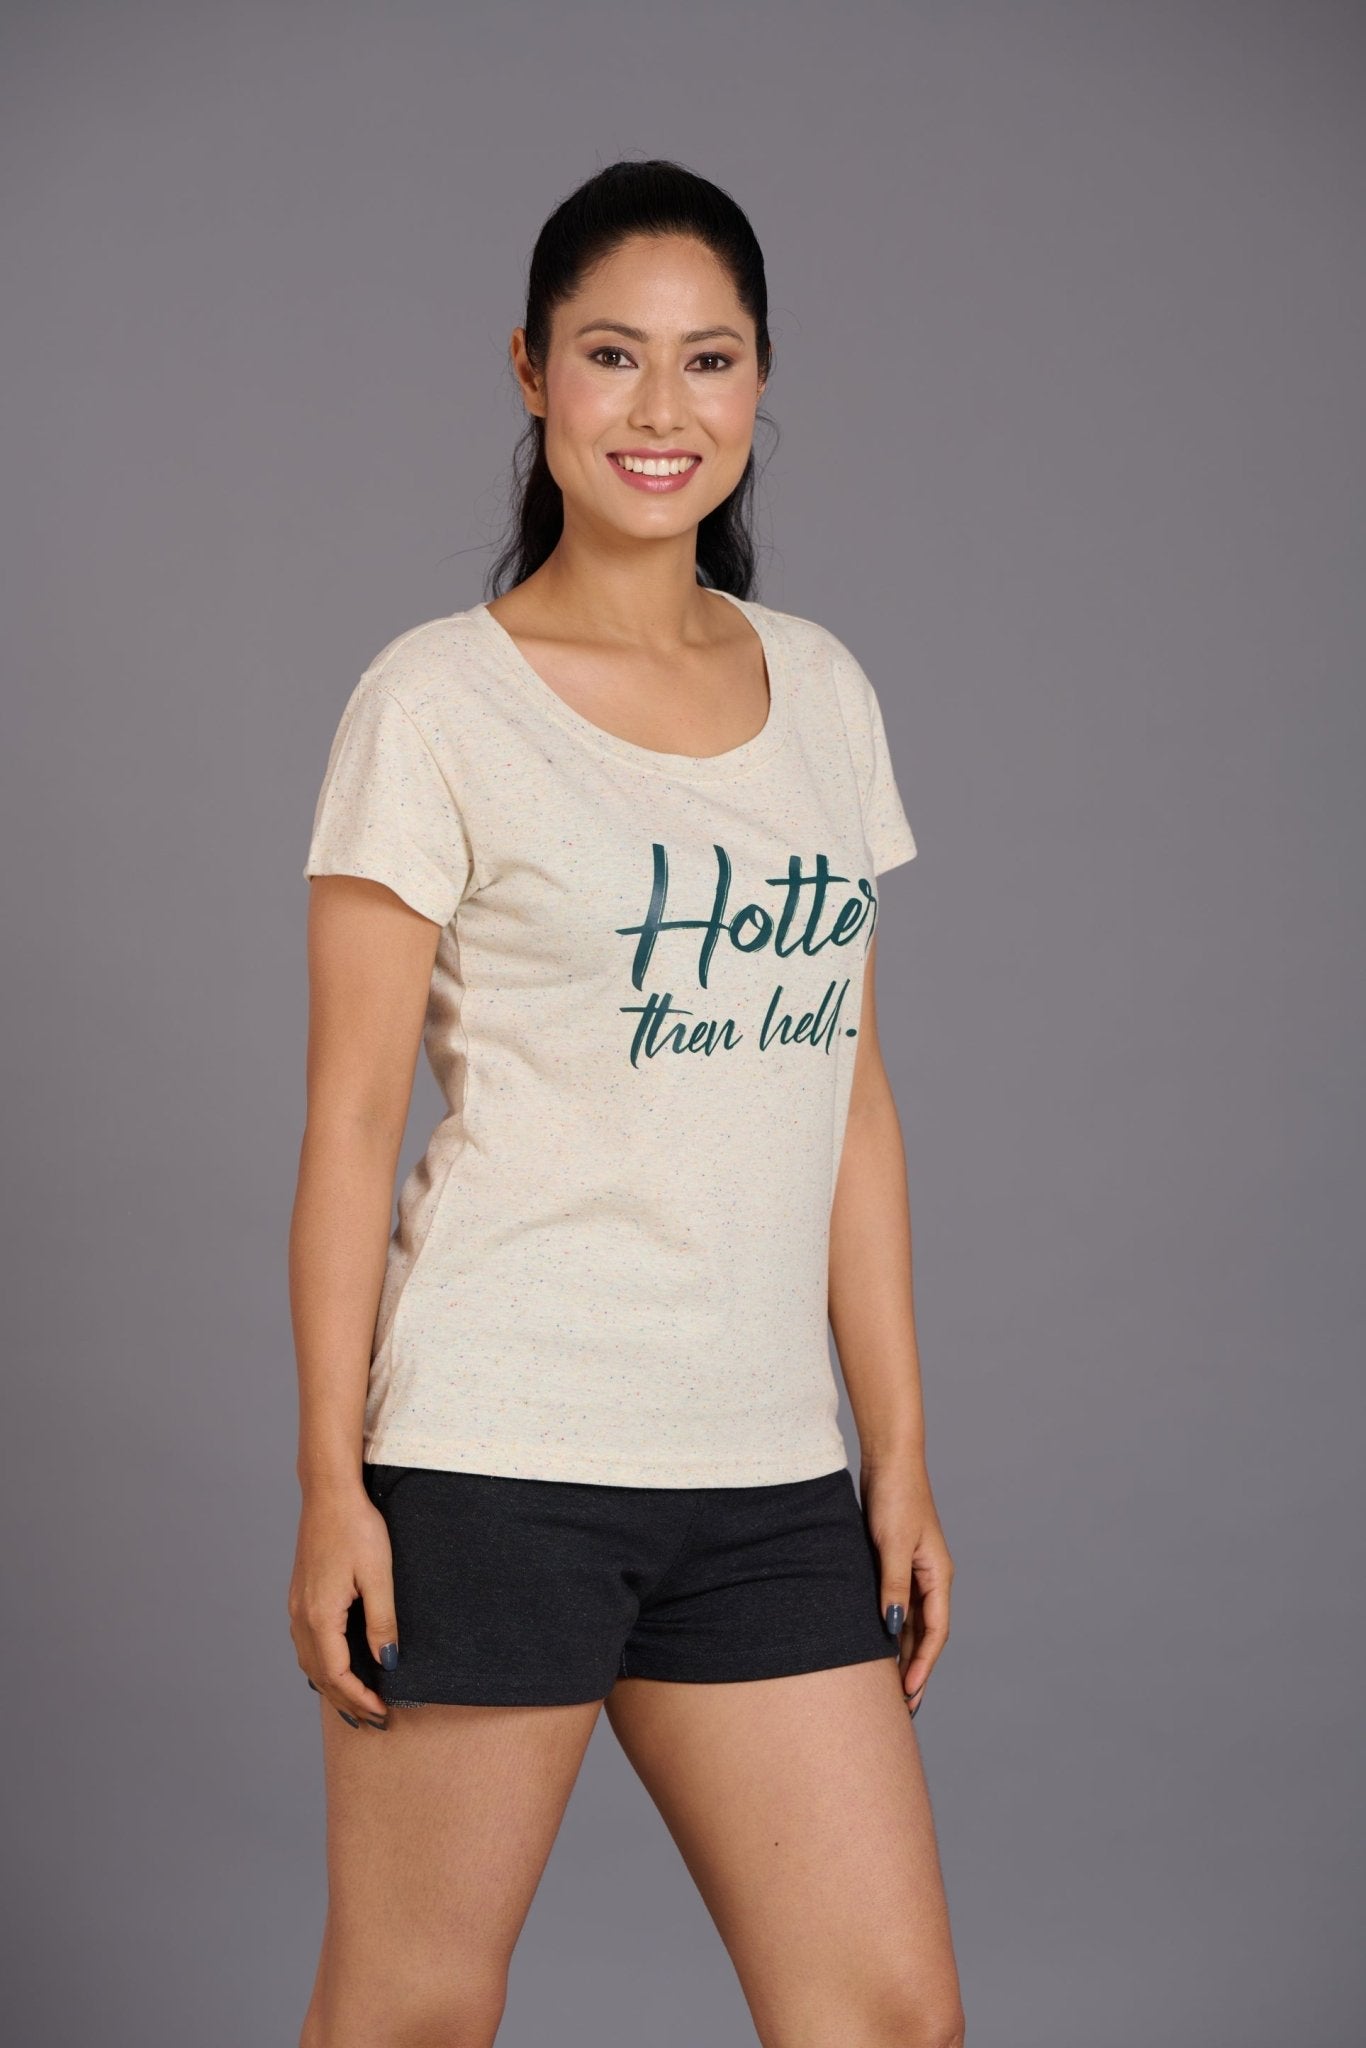 Hotter Than Hell Printed Cream Oversized T-Shirt for Women - Go Devil